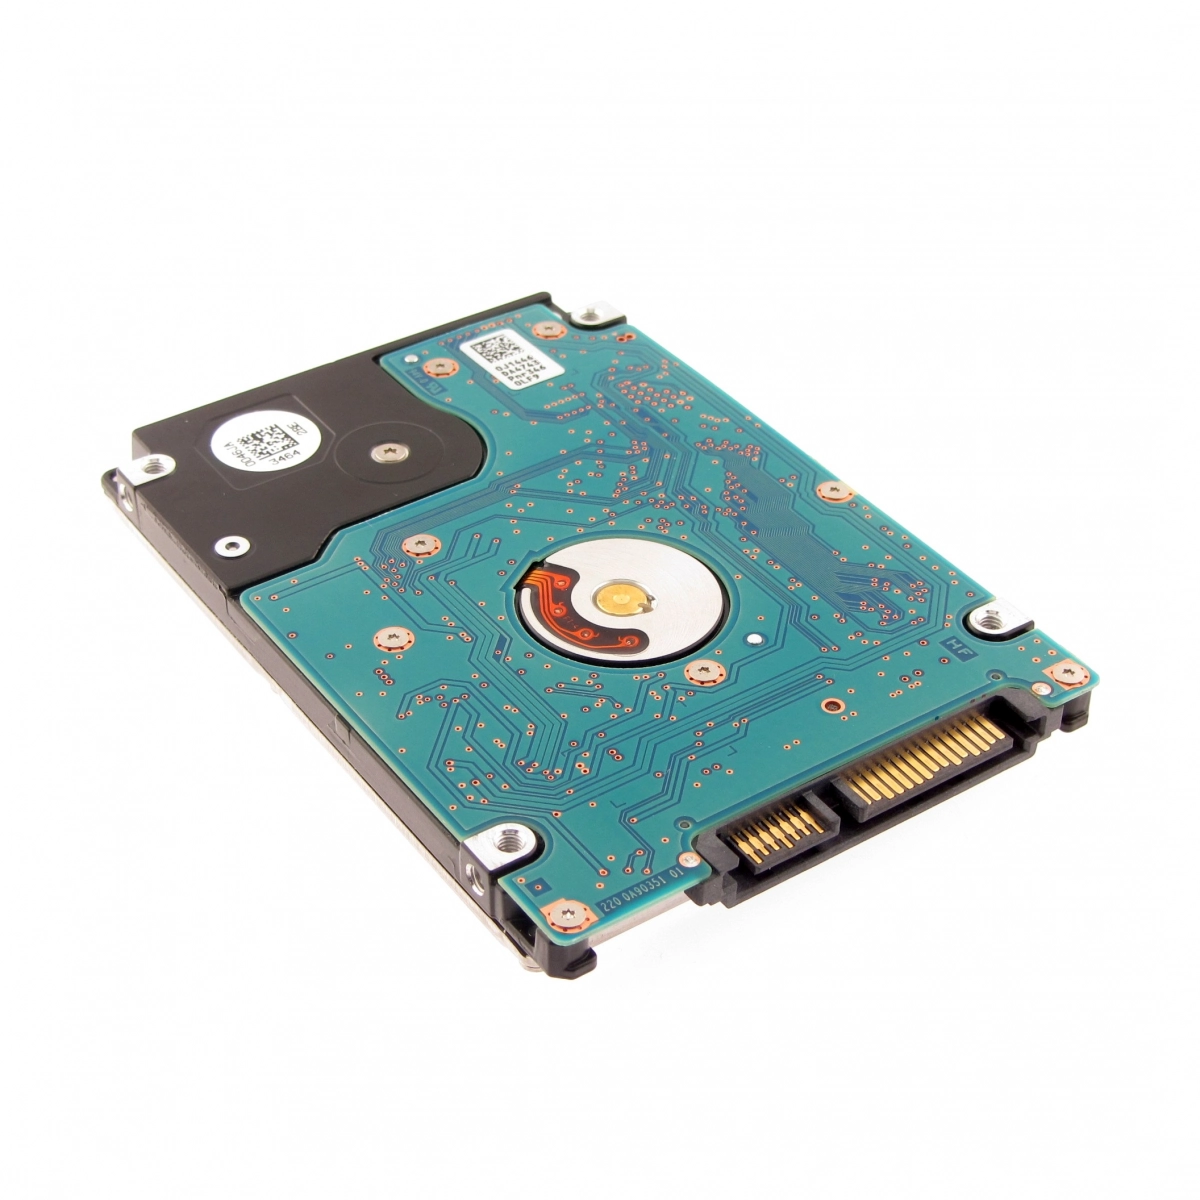 Notebook-Festplatte 1TB, 7mm, 7200rpm, 128MB für ASUS X93S